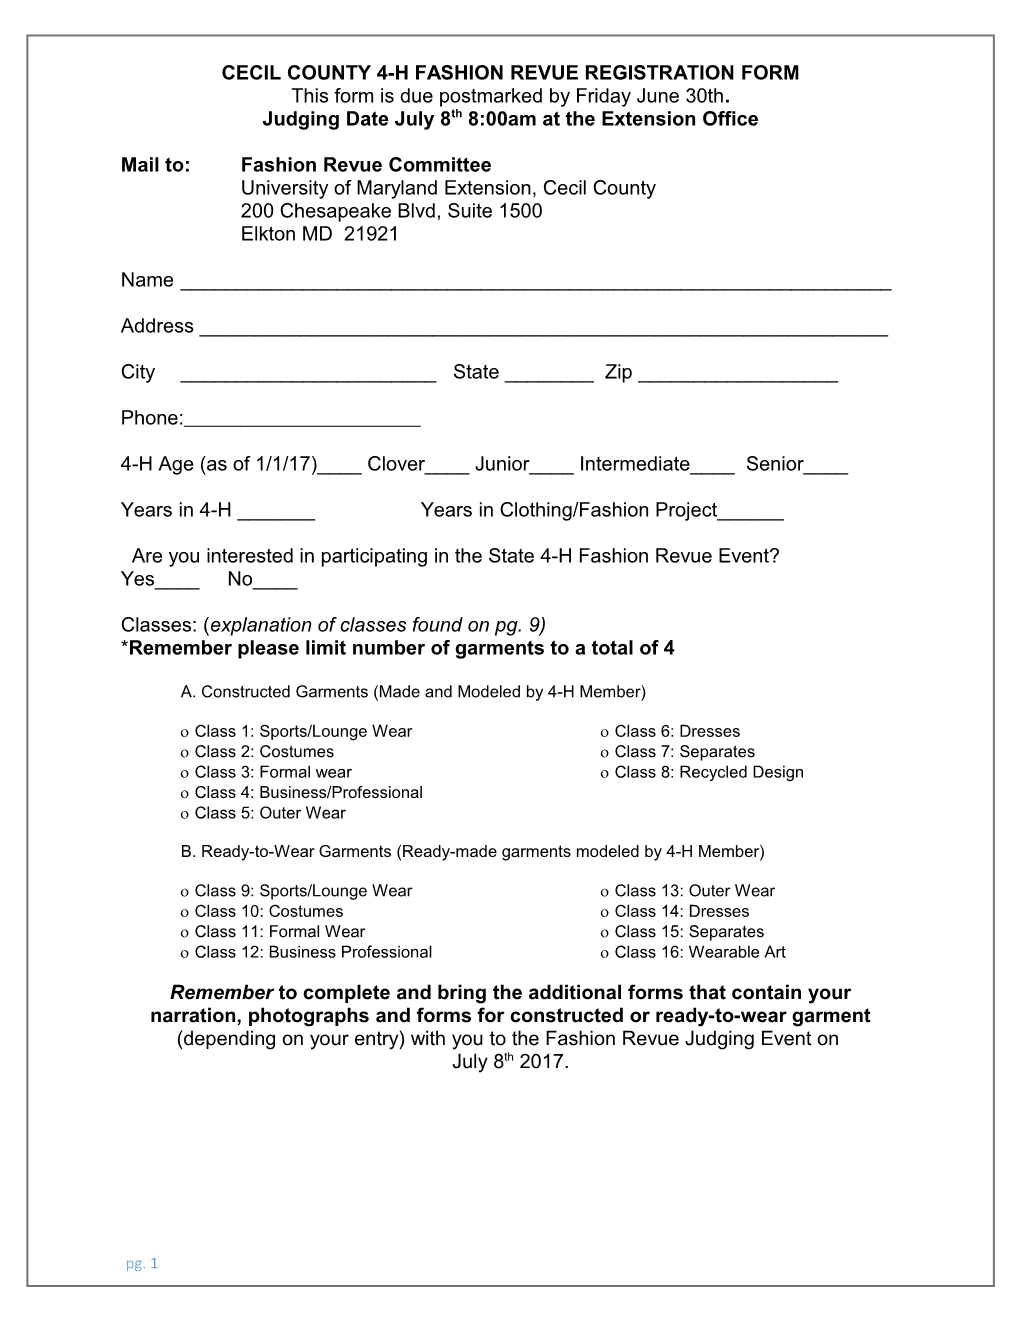 Cecil County 4-H Fashion Revue Registration Form